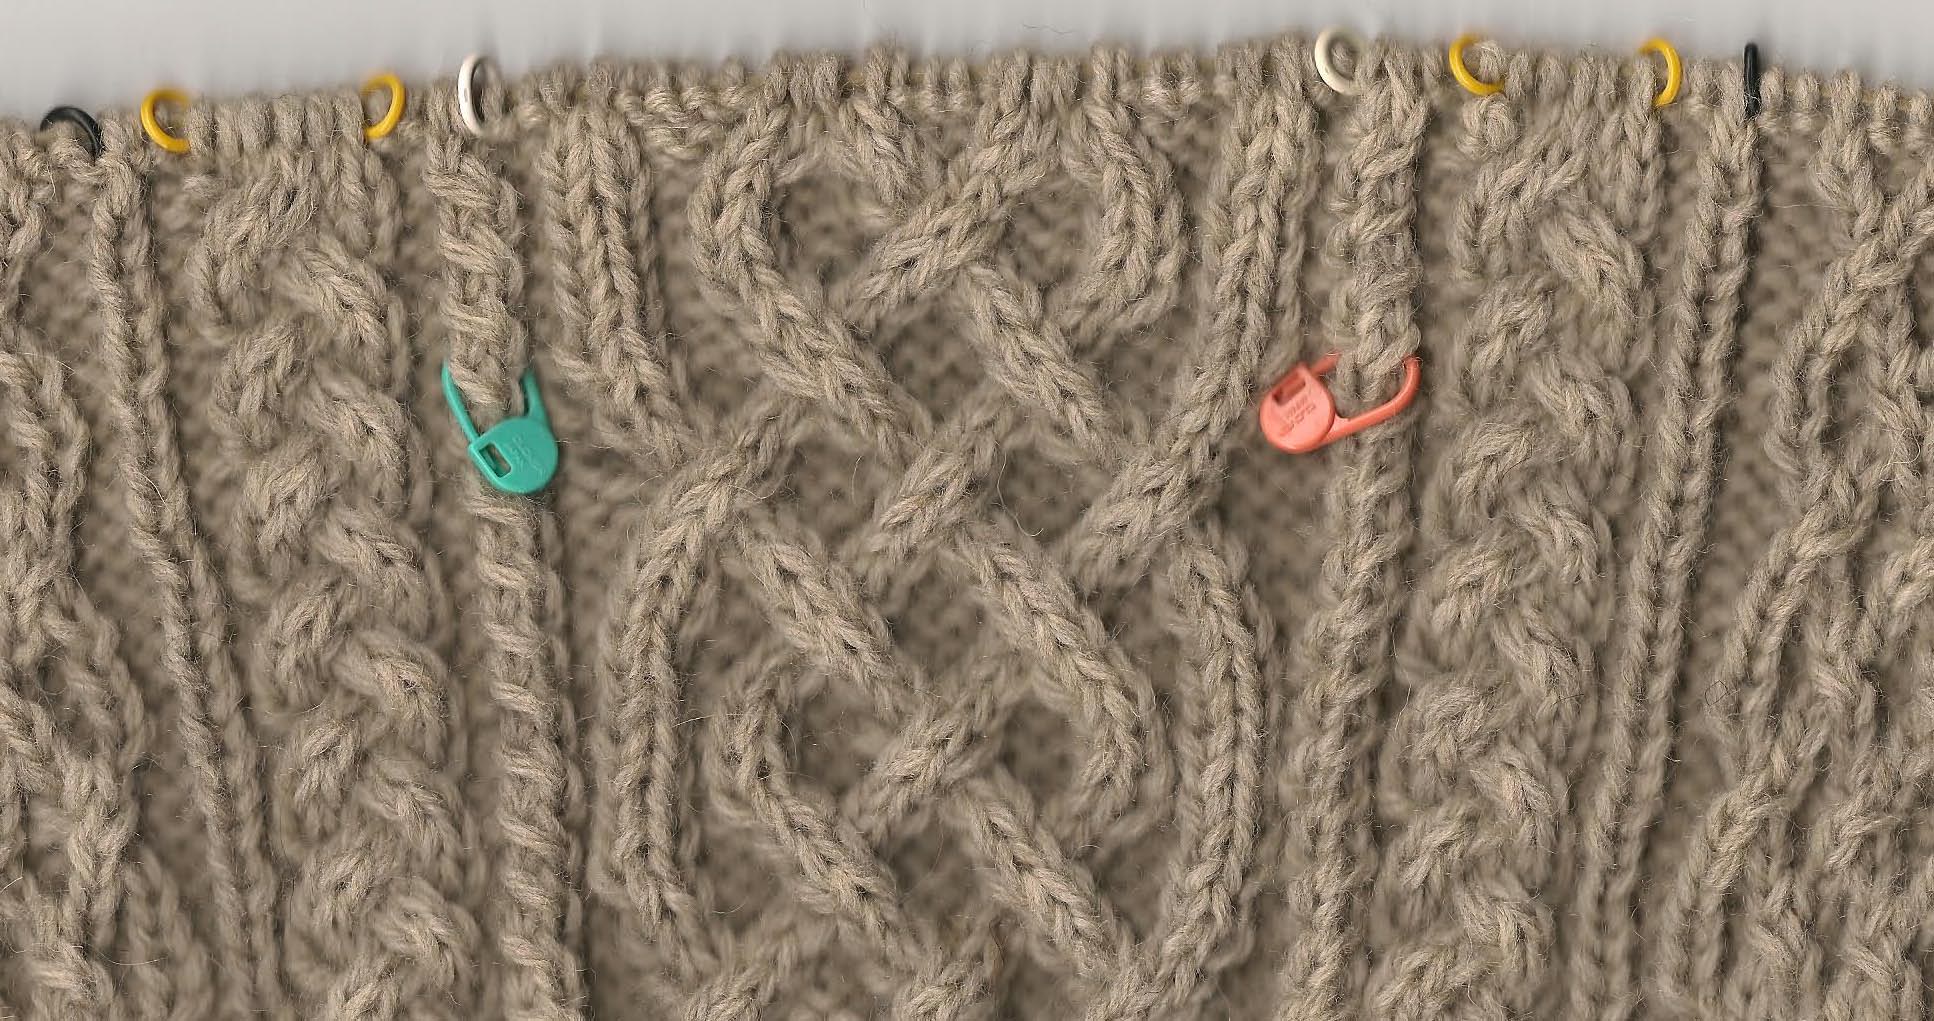 Knitting Patterns - DogGoneKnit.com: Free Dog Sweater Knitting and